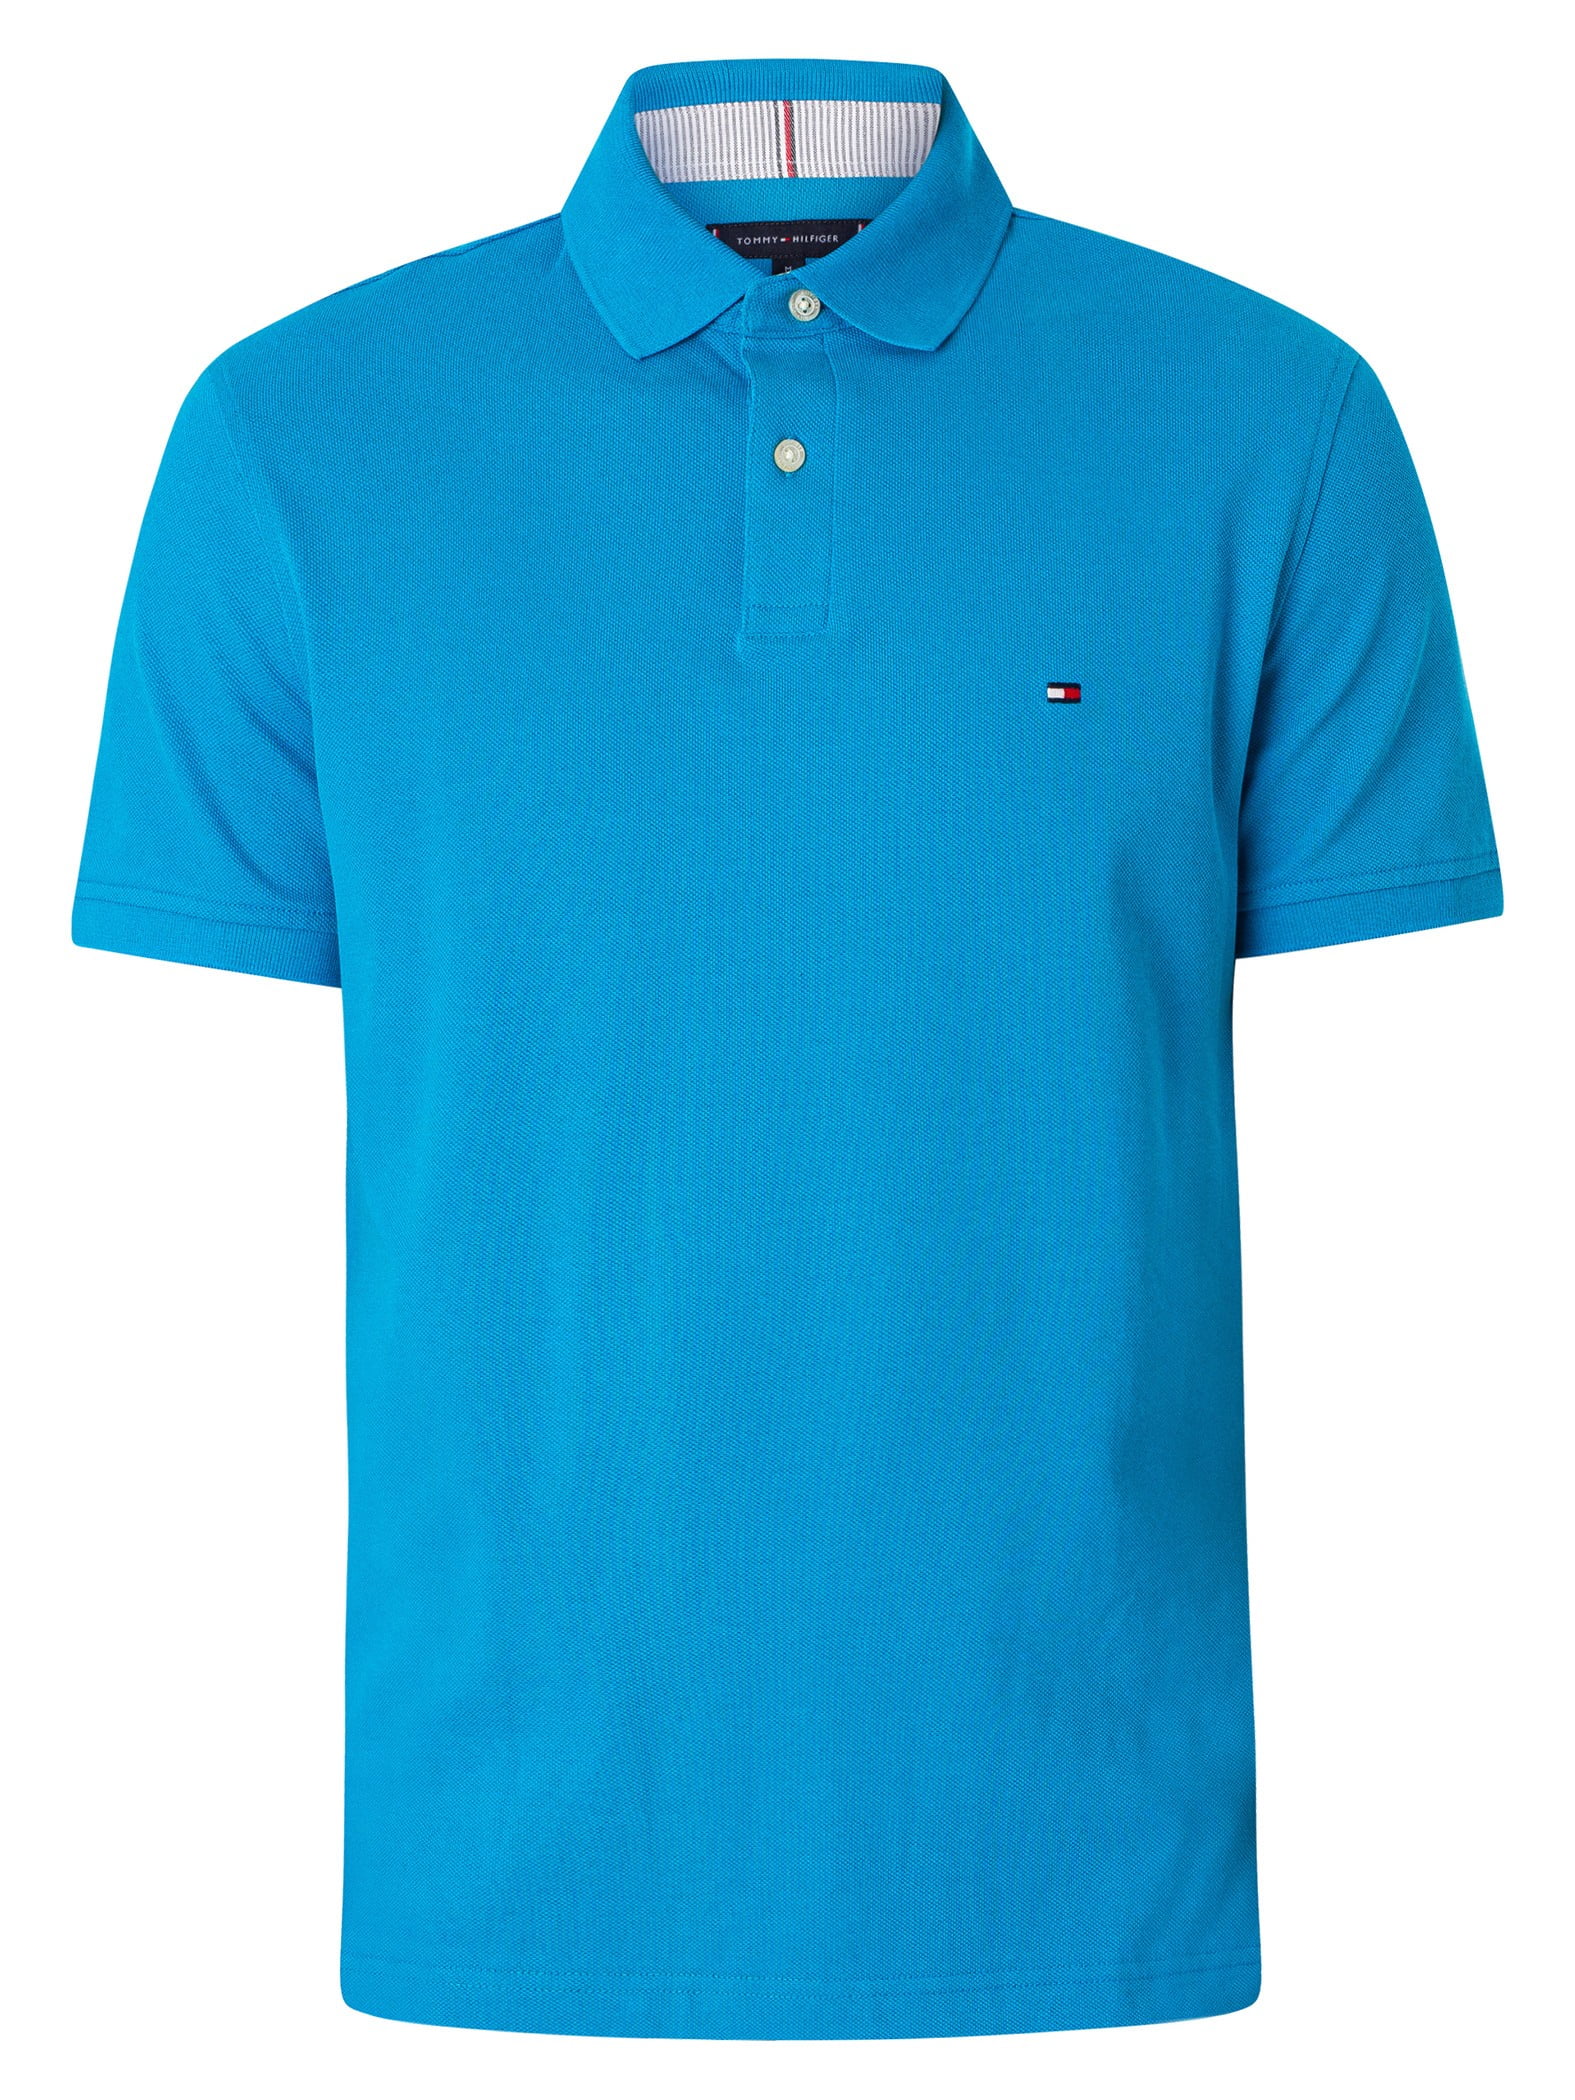 Blue Hilfiger 1985 Polo Shirt, Tommy Regular